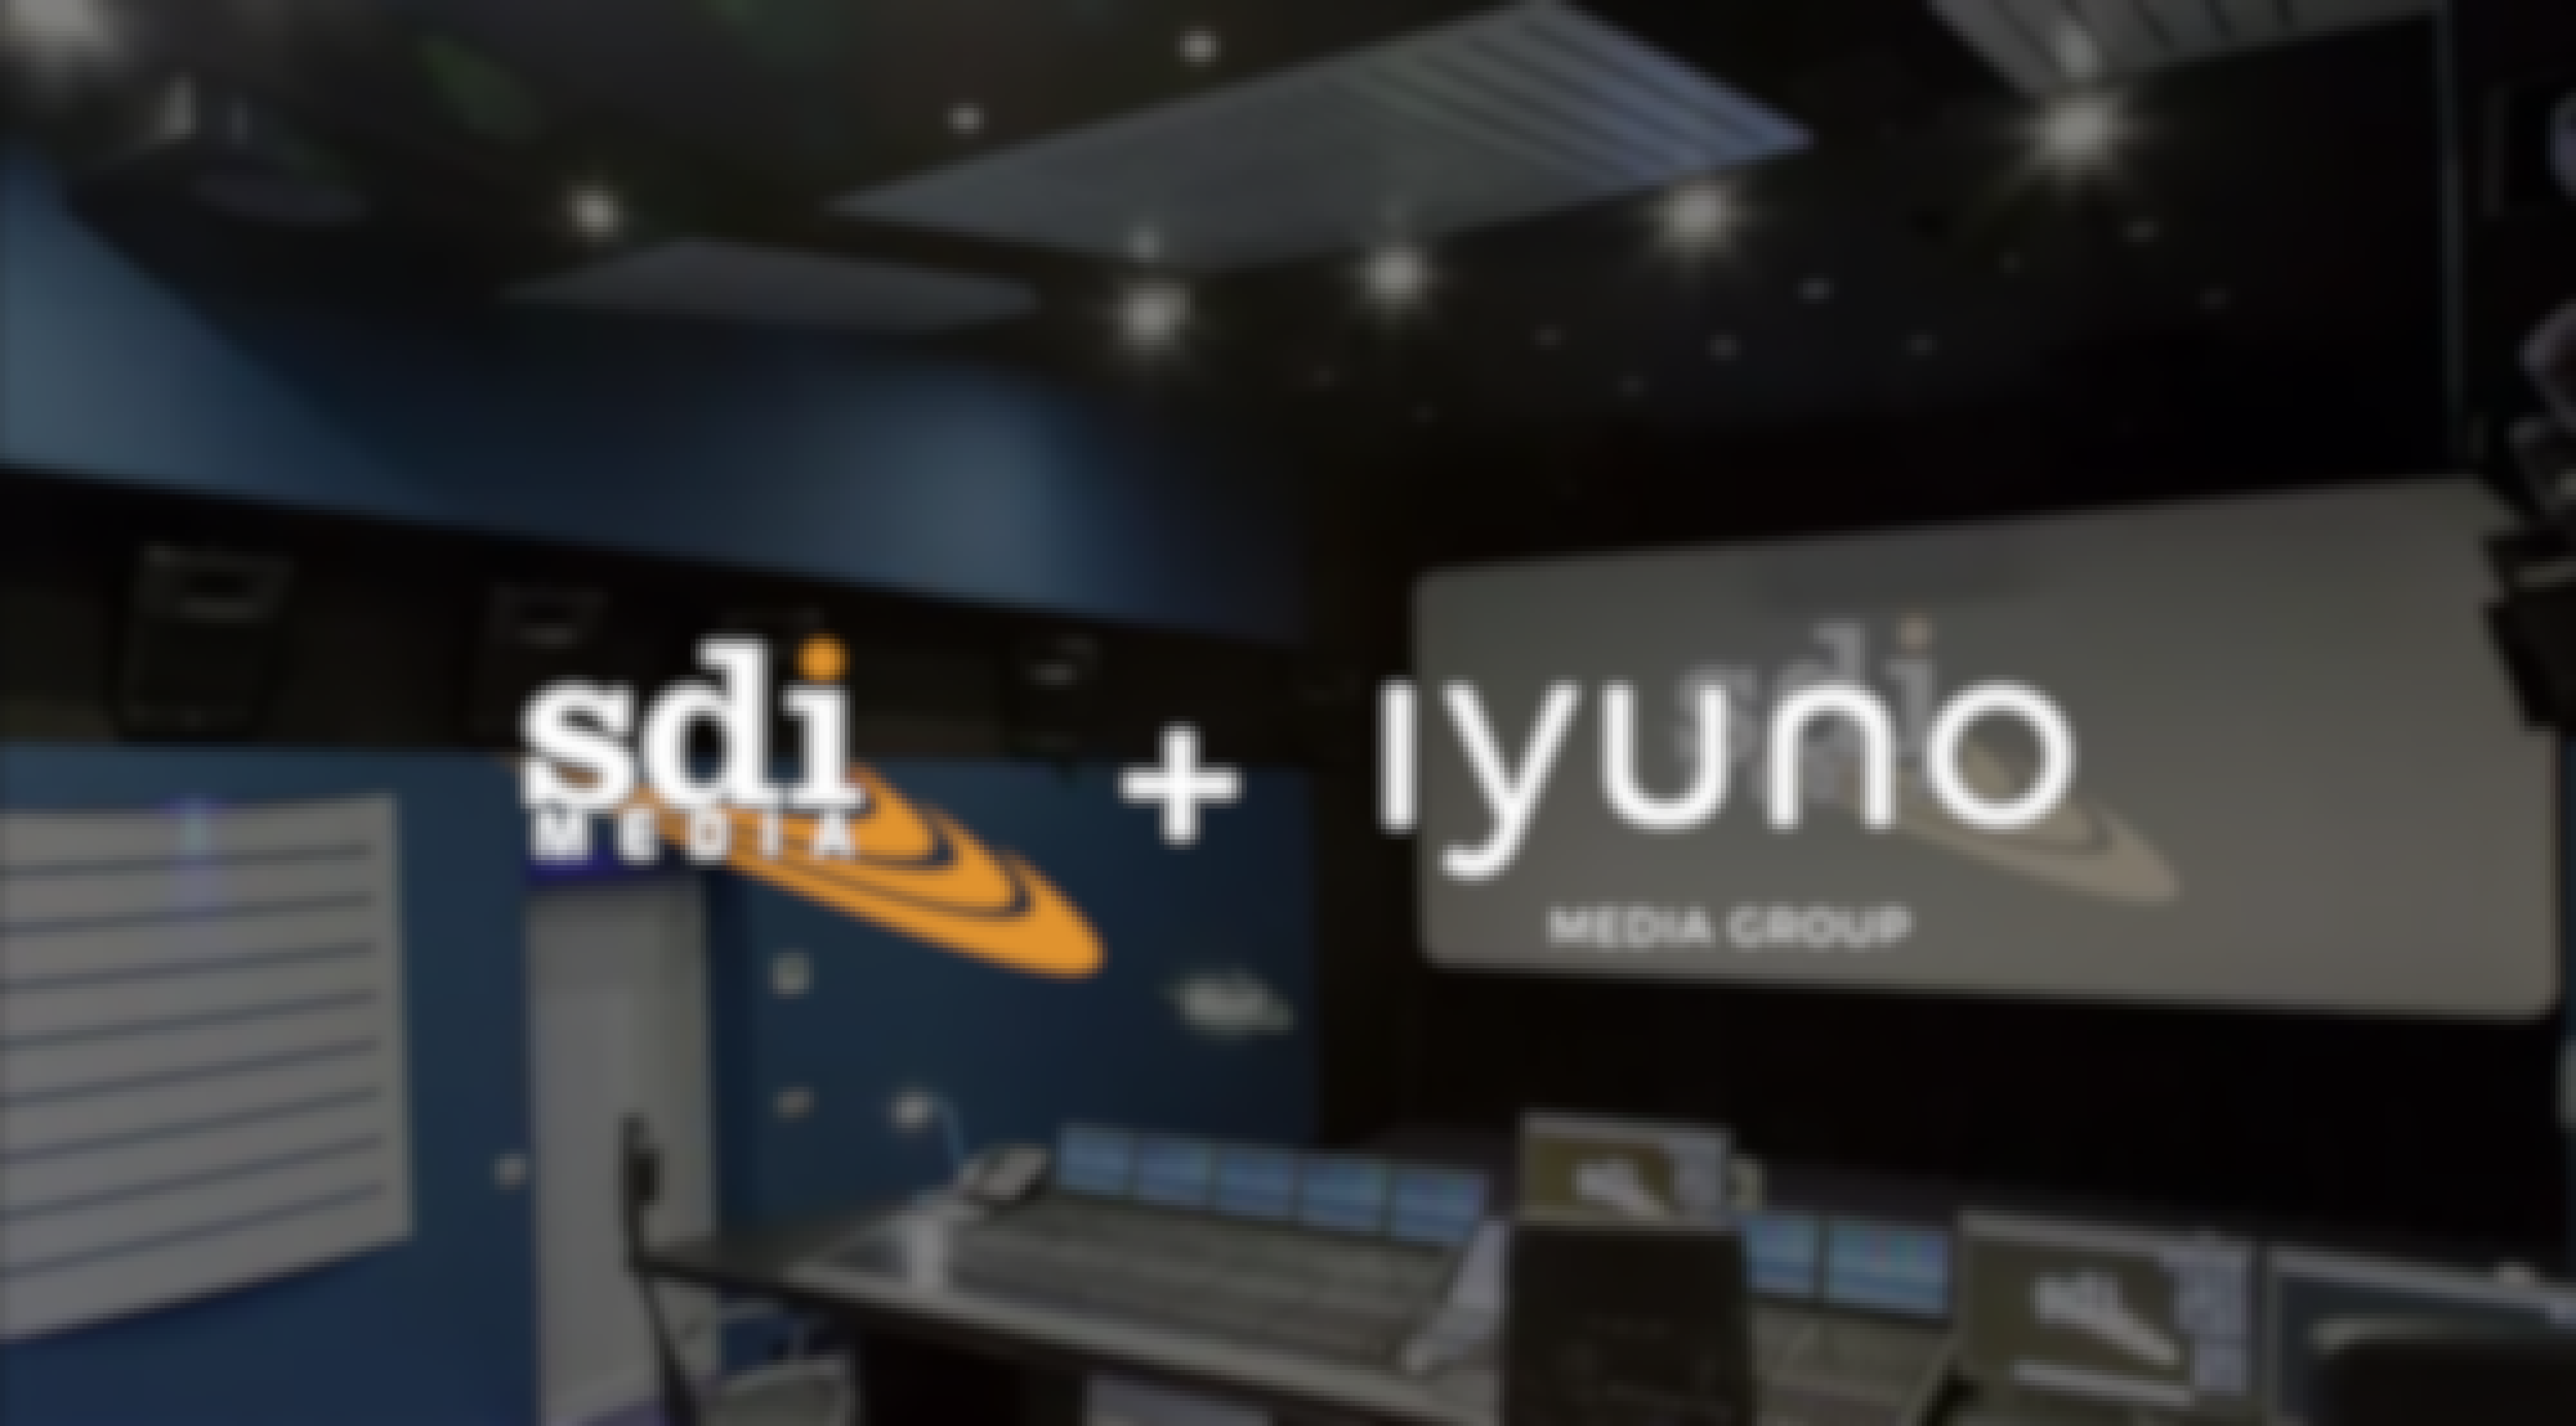 Iyuno Media Group to acquire SDI Media